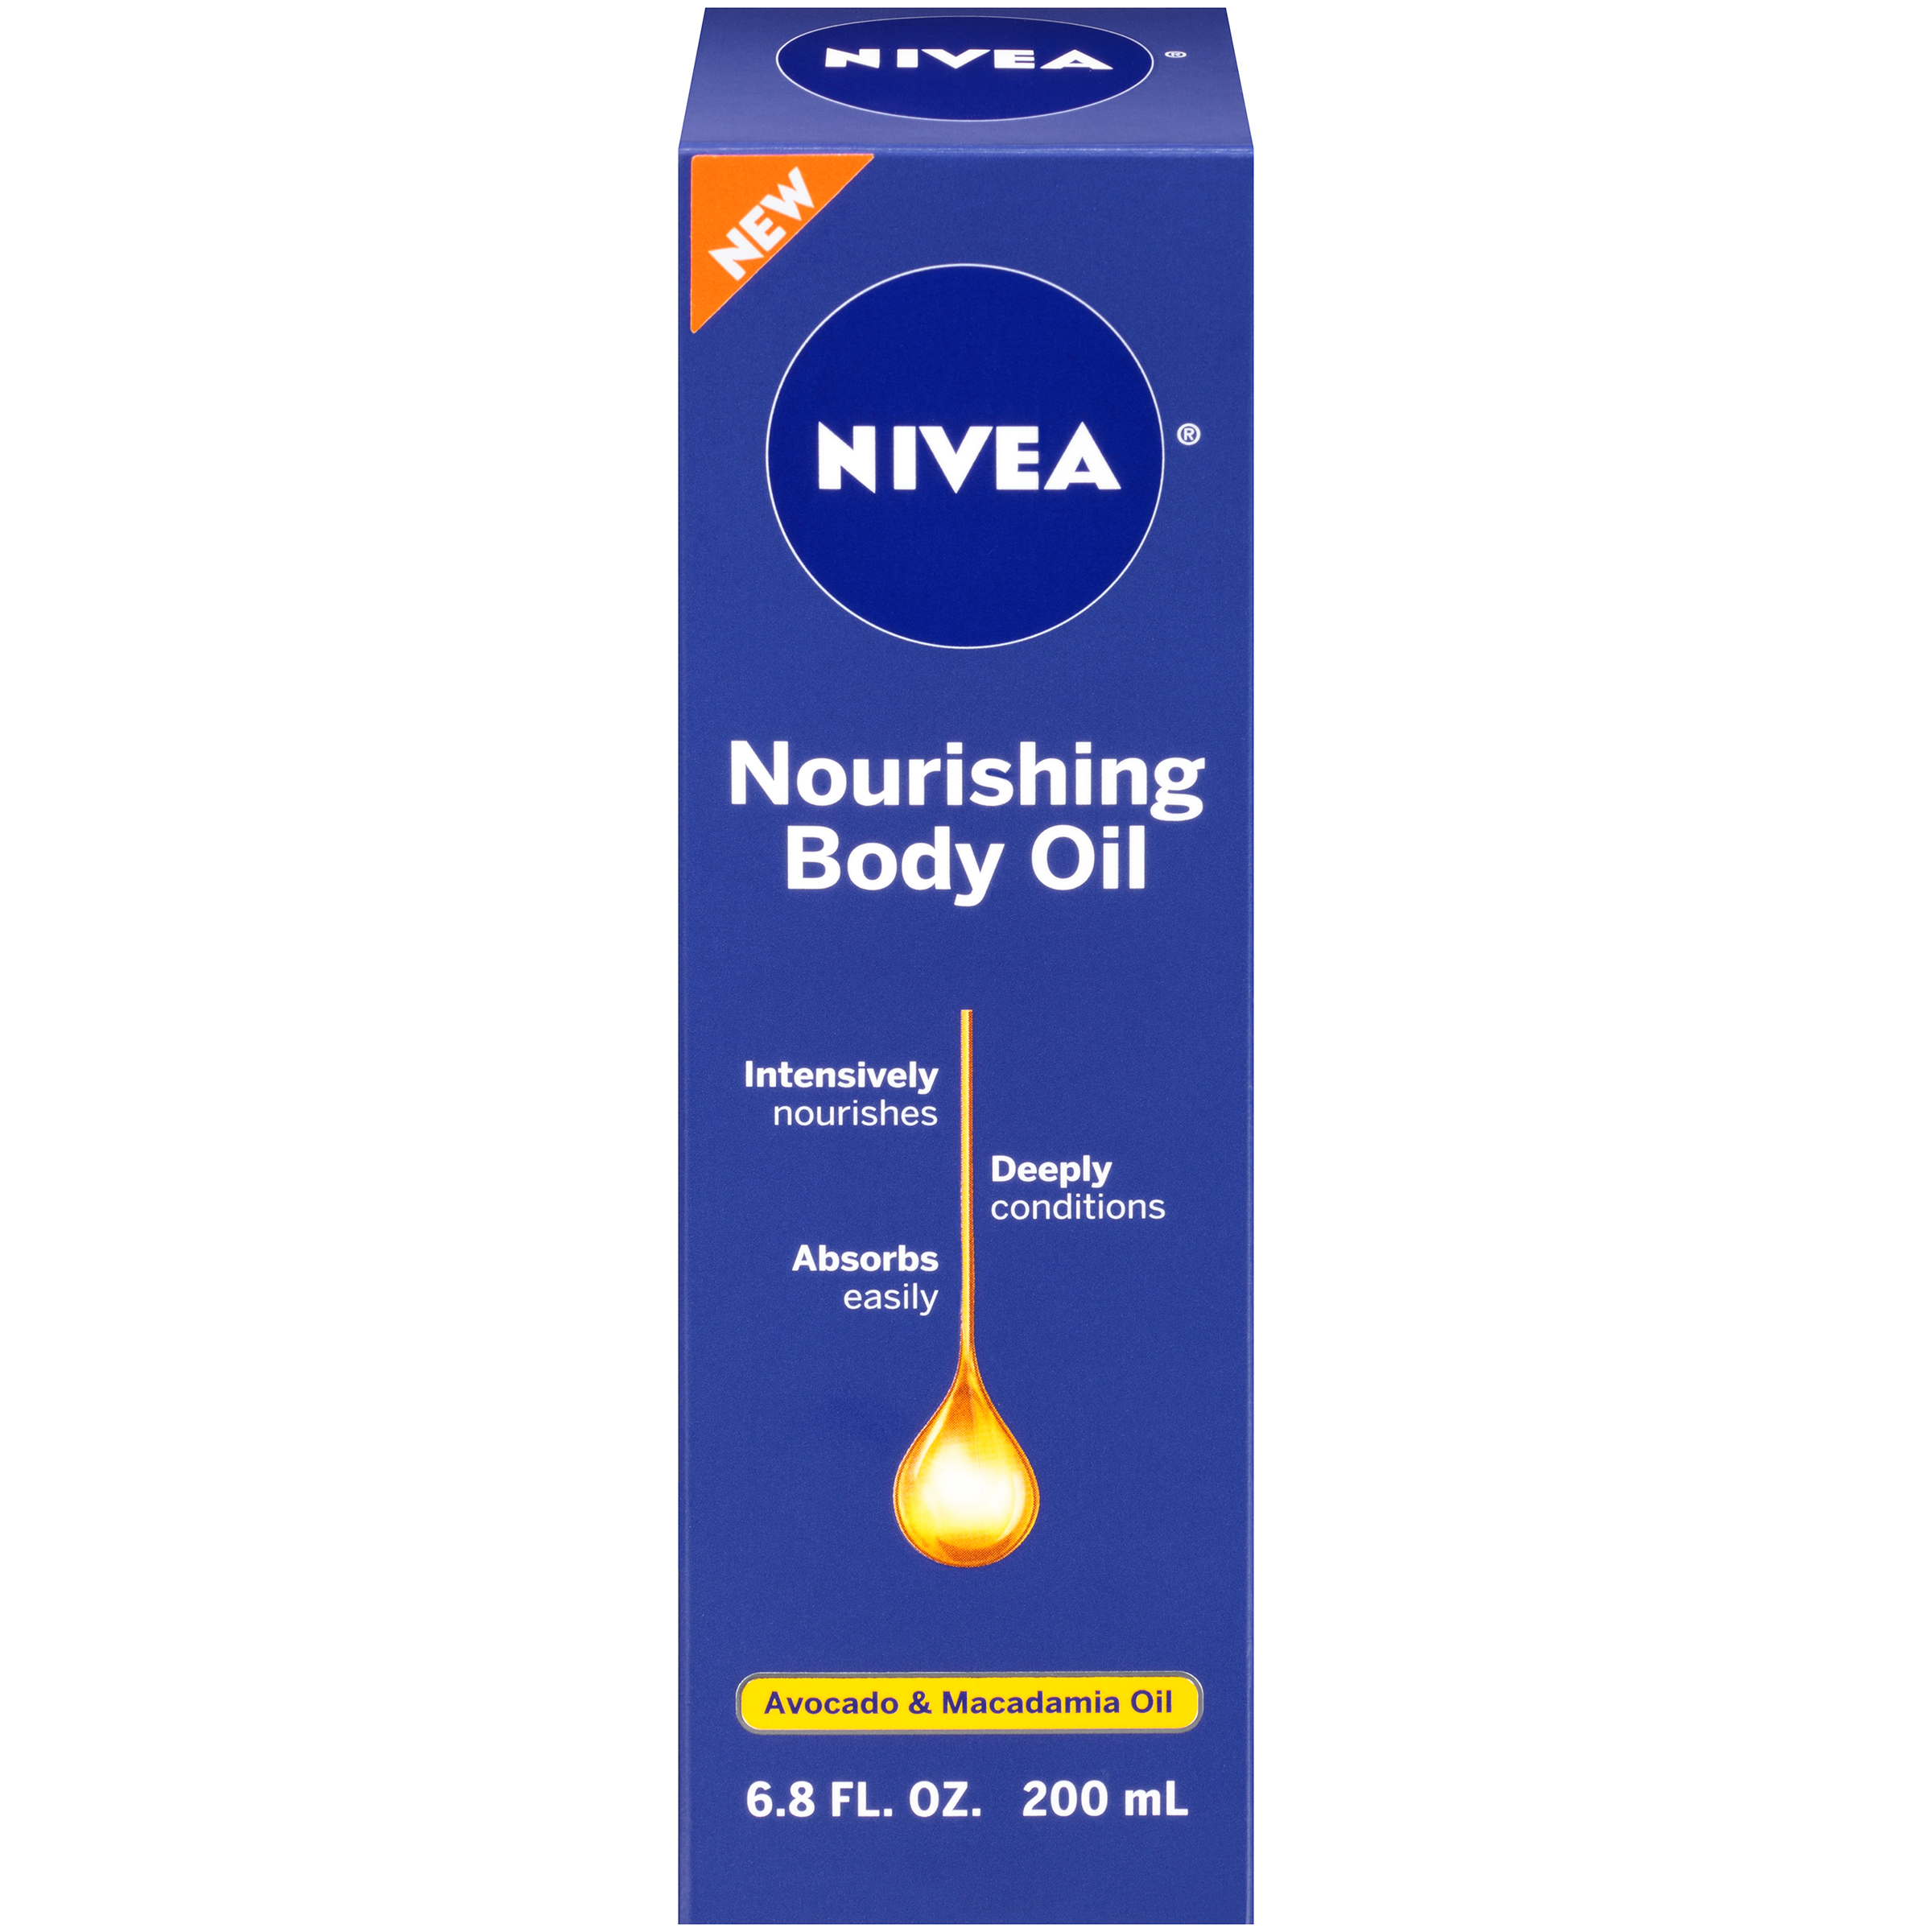 NIVEA Nourishing Body Oil 6.8 fl. oz. - image 3 of 4